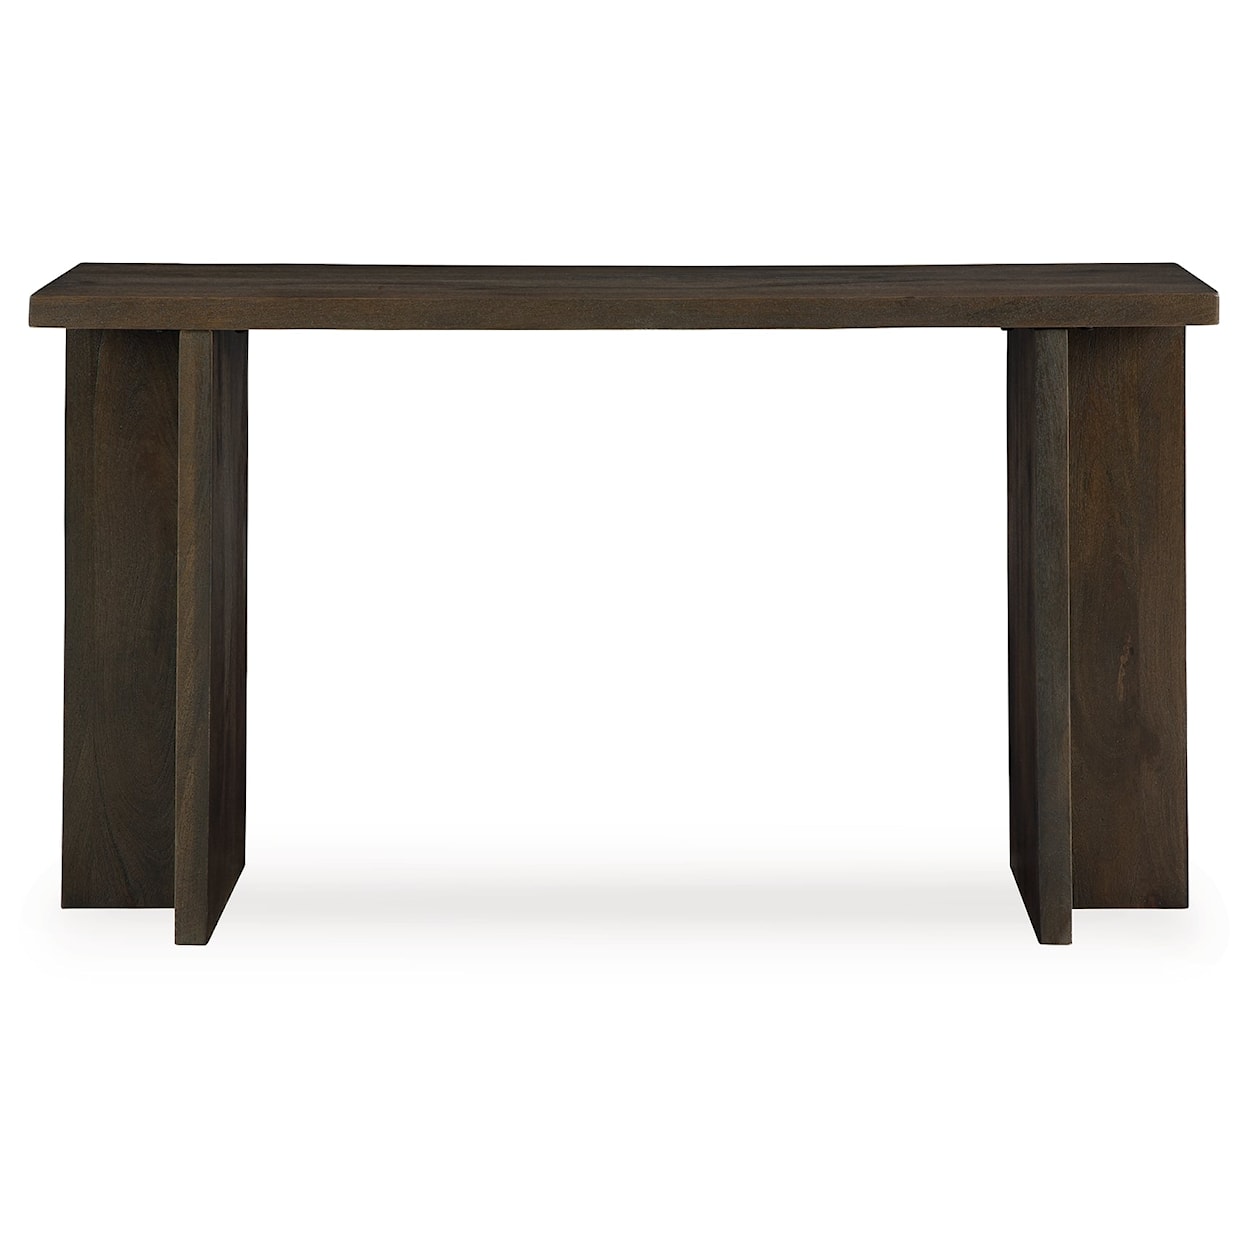 Ashley Furniture Signature Design Jalenry Console Sofa Table